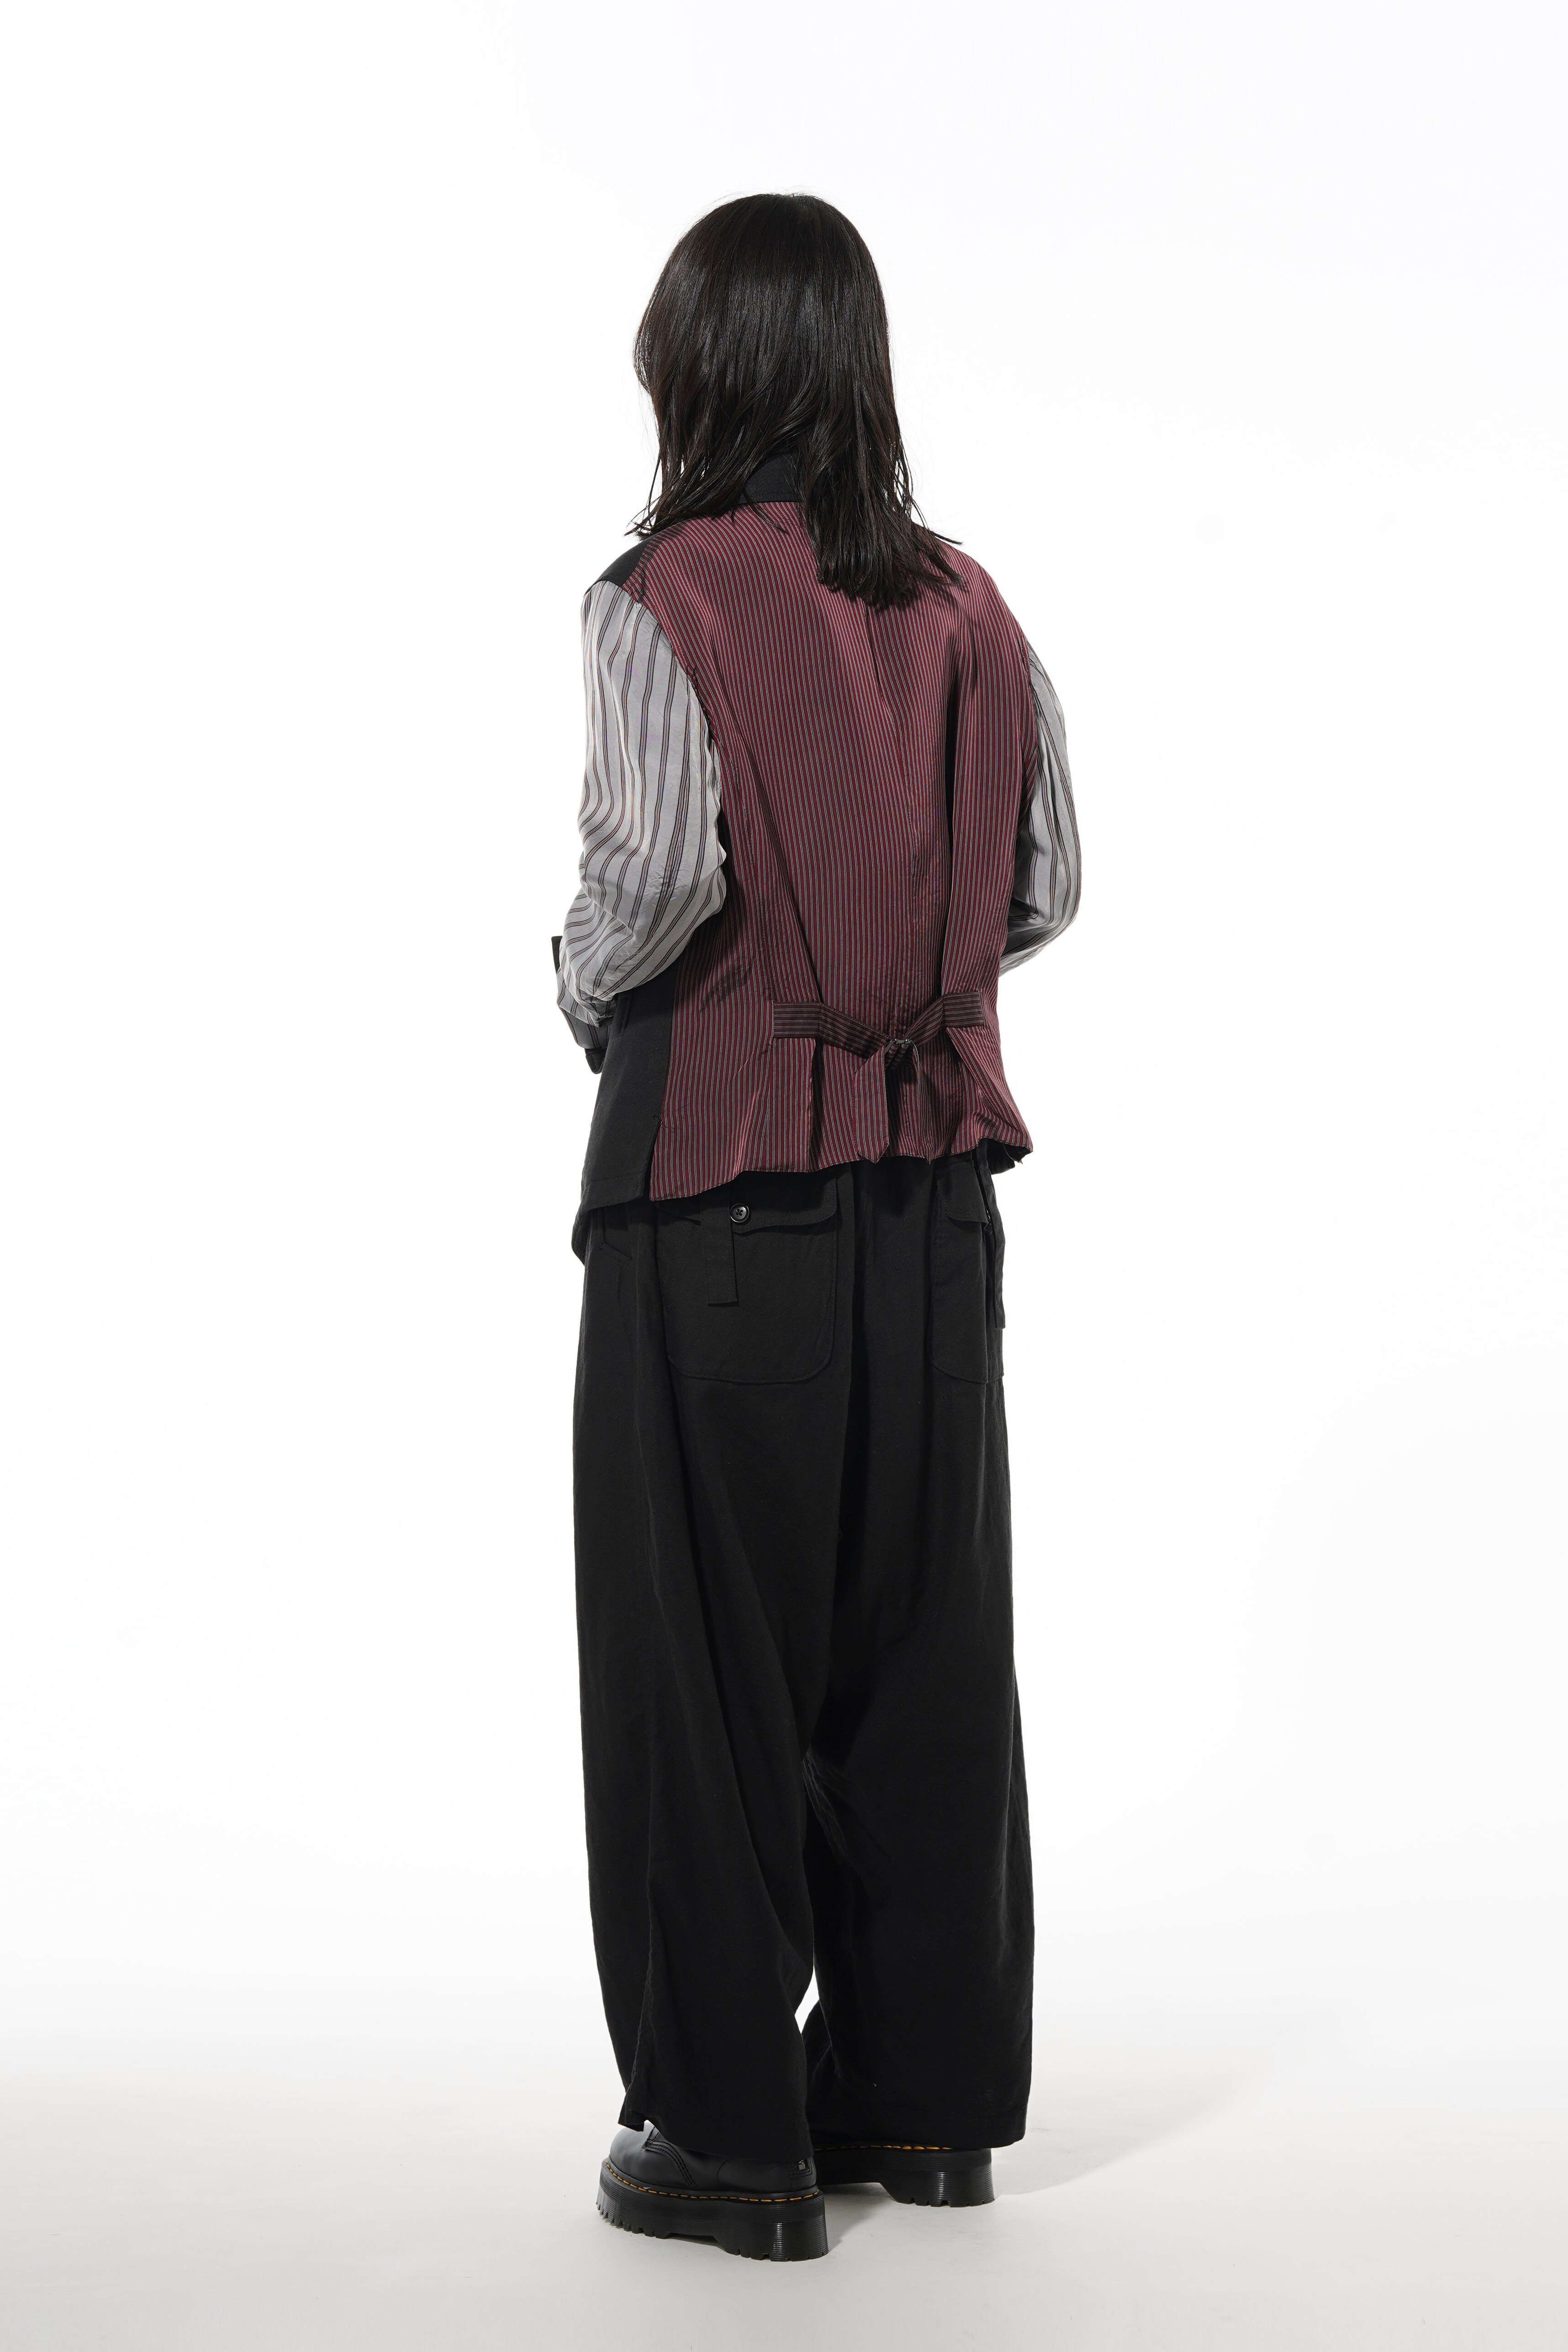 Li/C Herringbone Washer Twill Inside Out 6BS Peak Jacket Vest